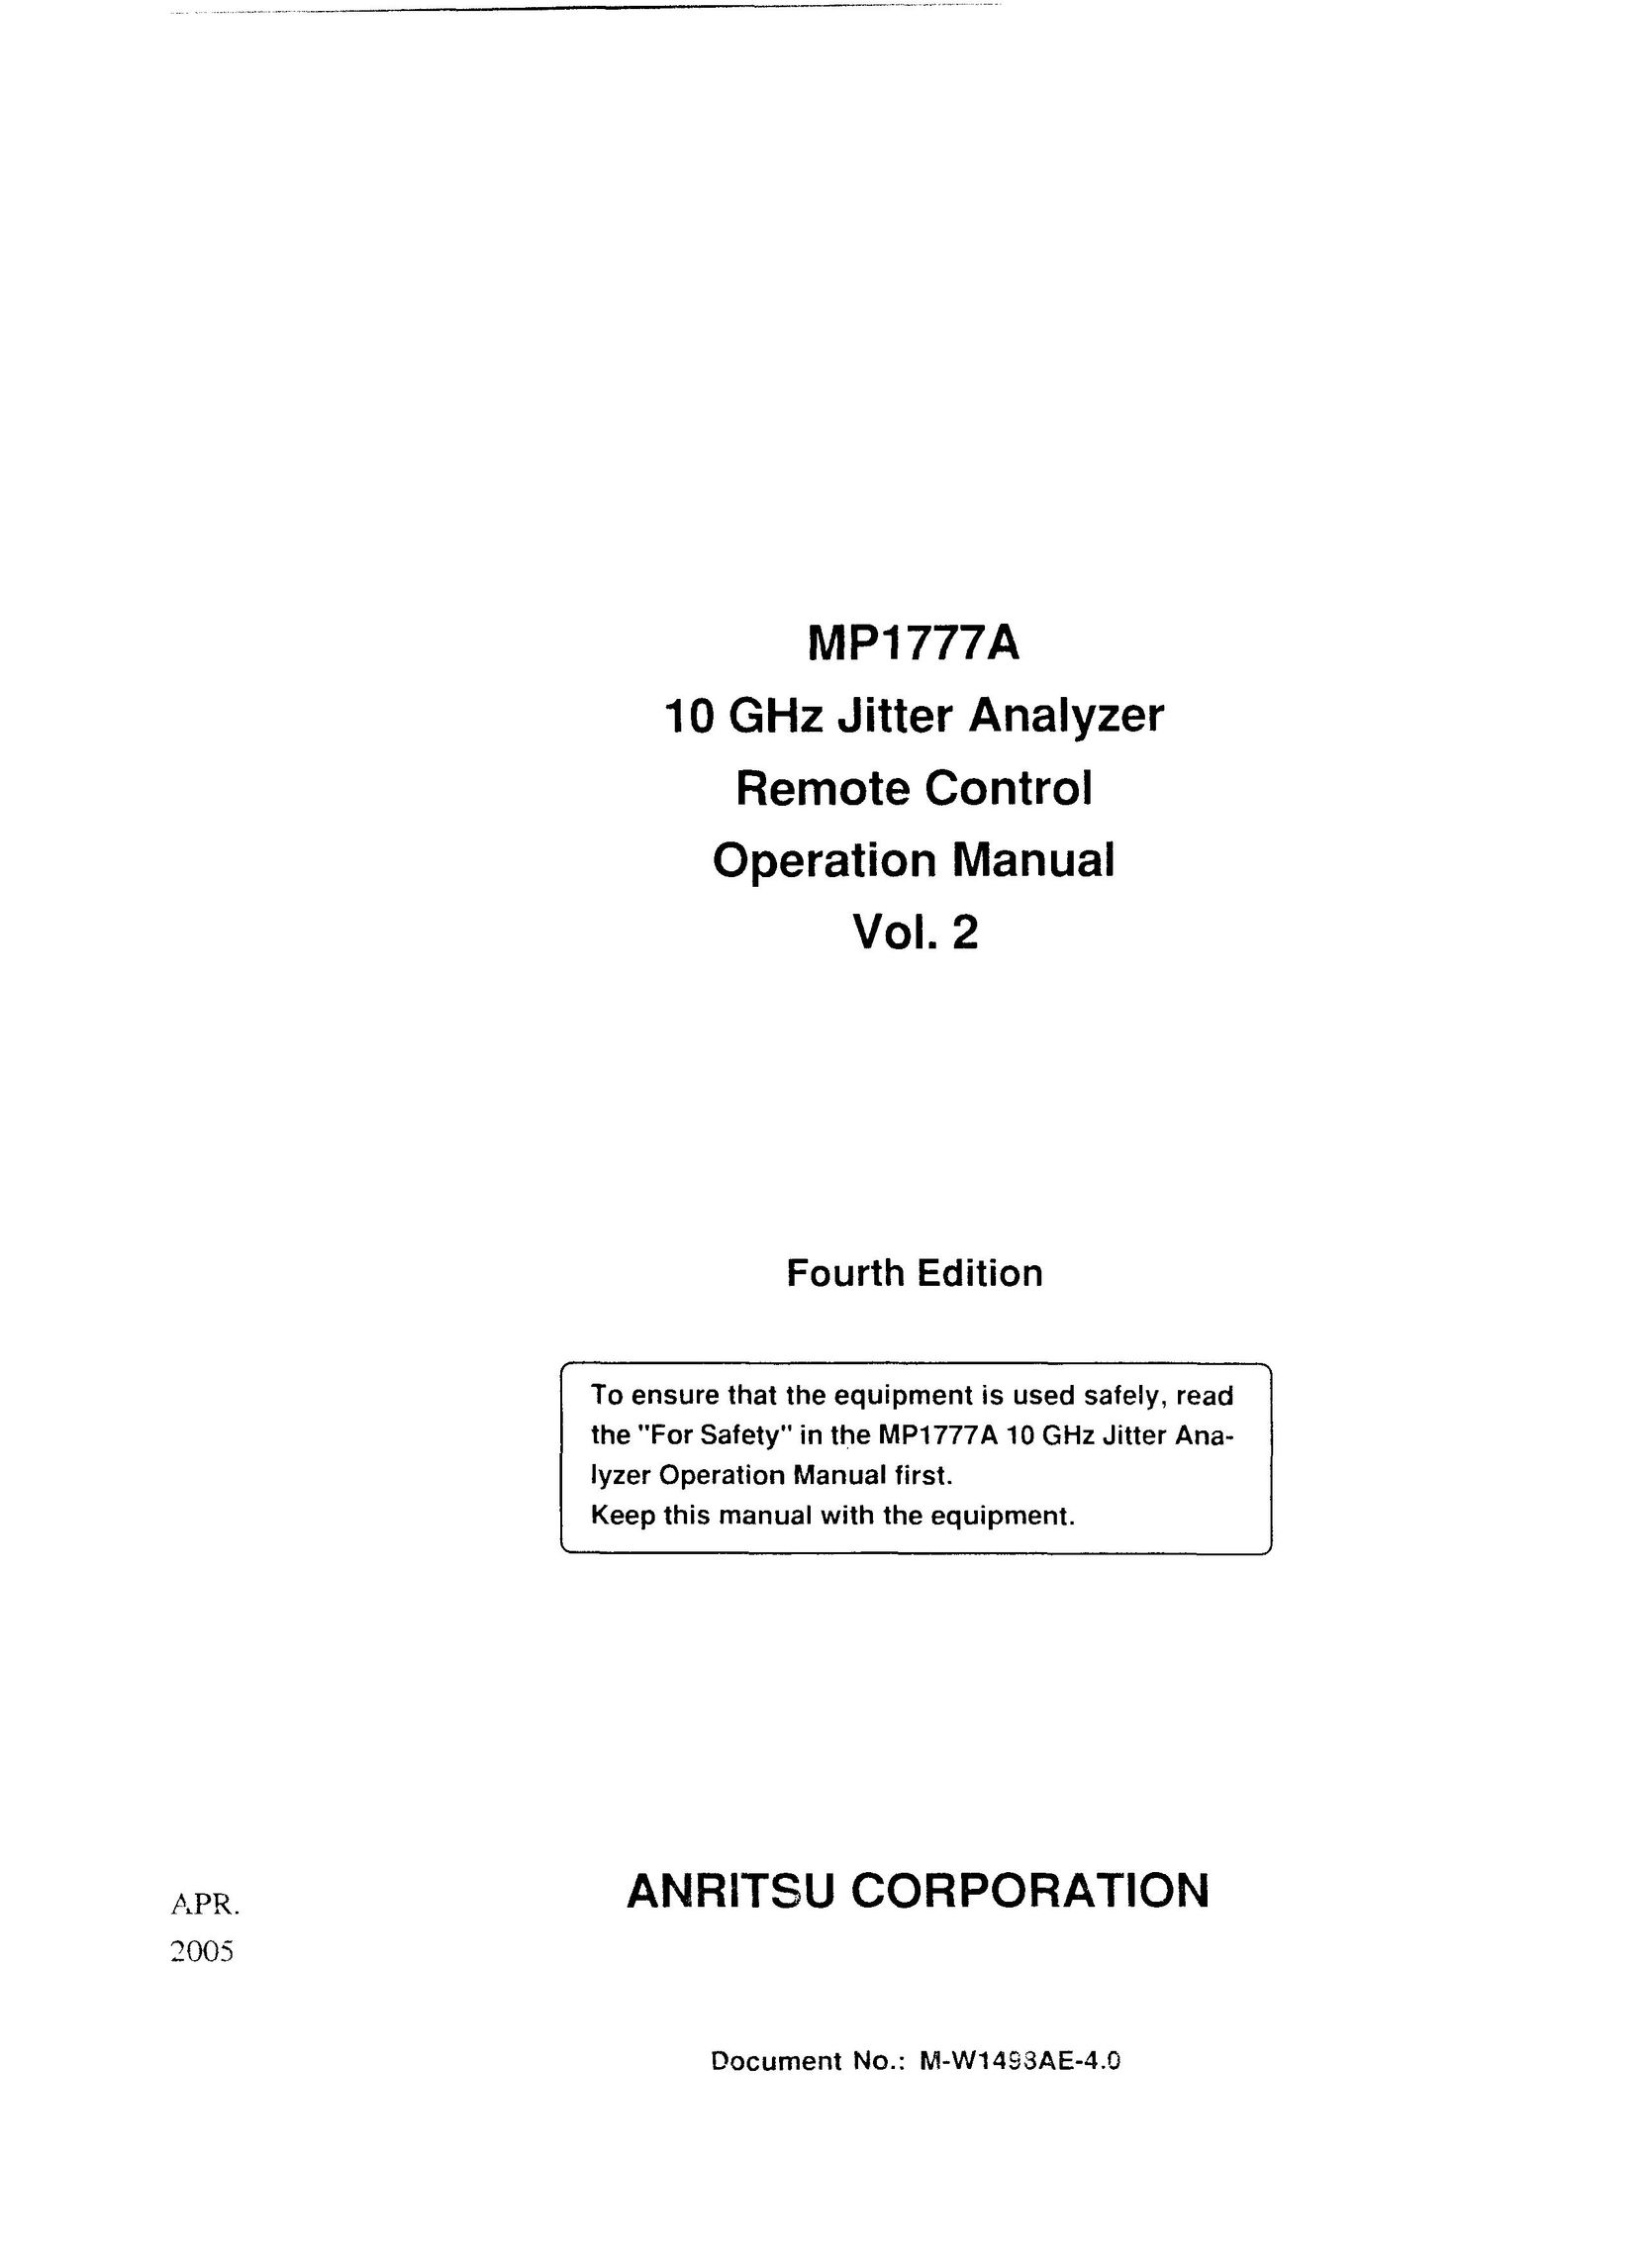 Anritsu MP1777A Universal Remote User Manual